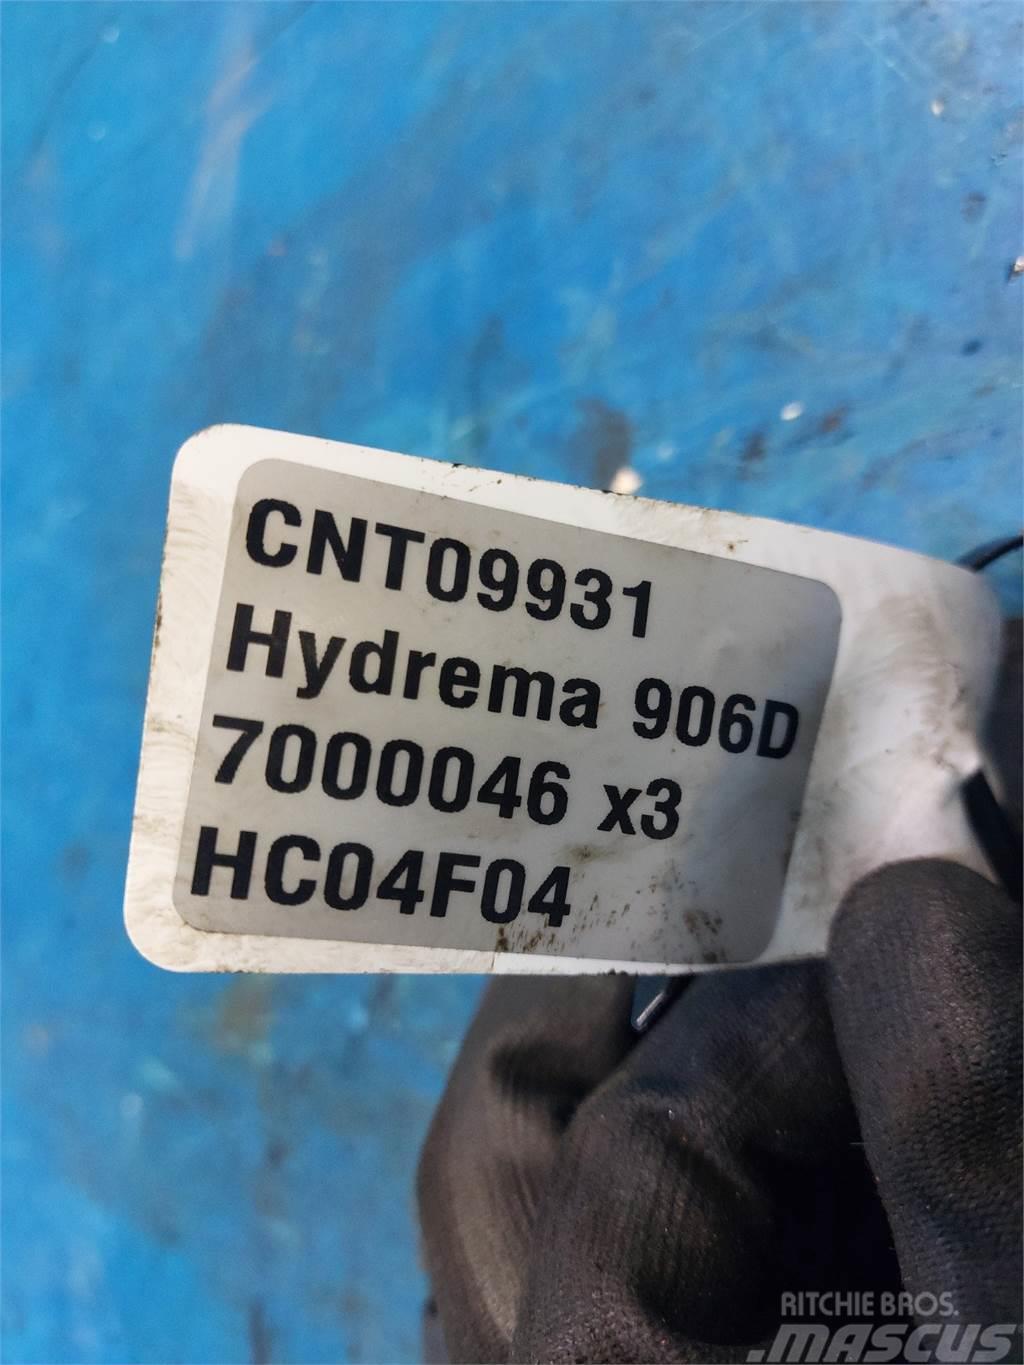 Hydrema 906D Transmission